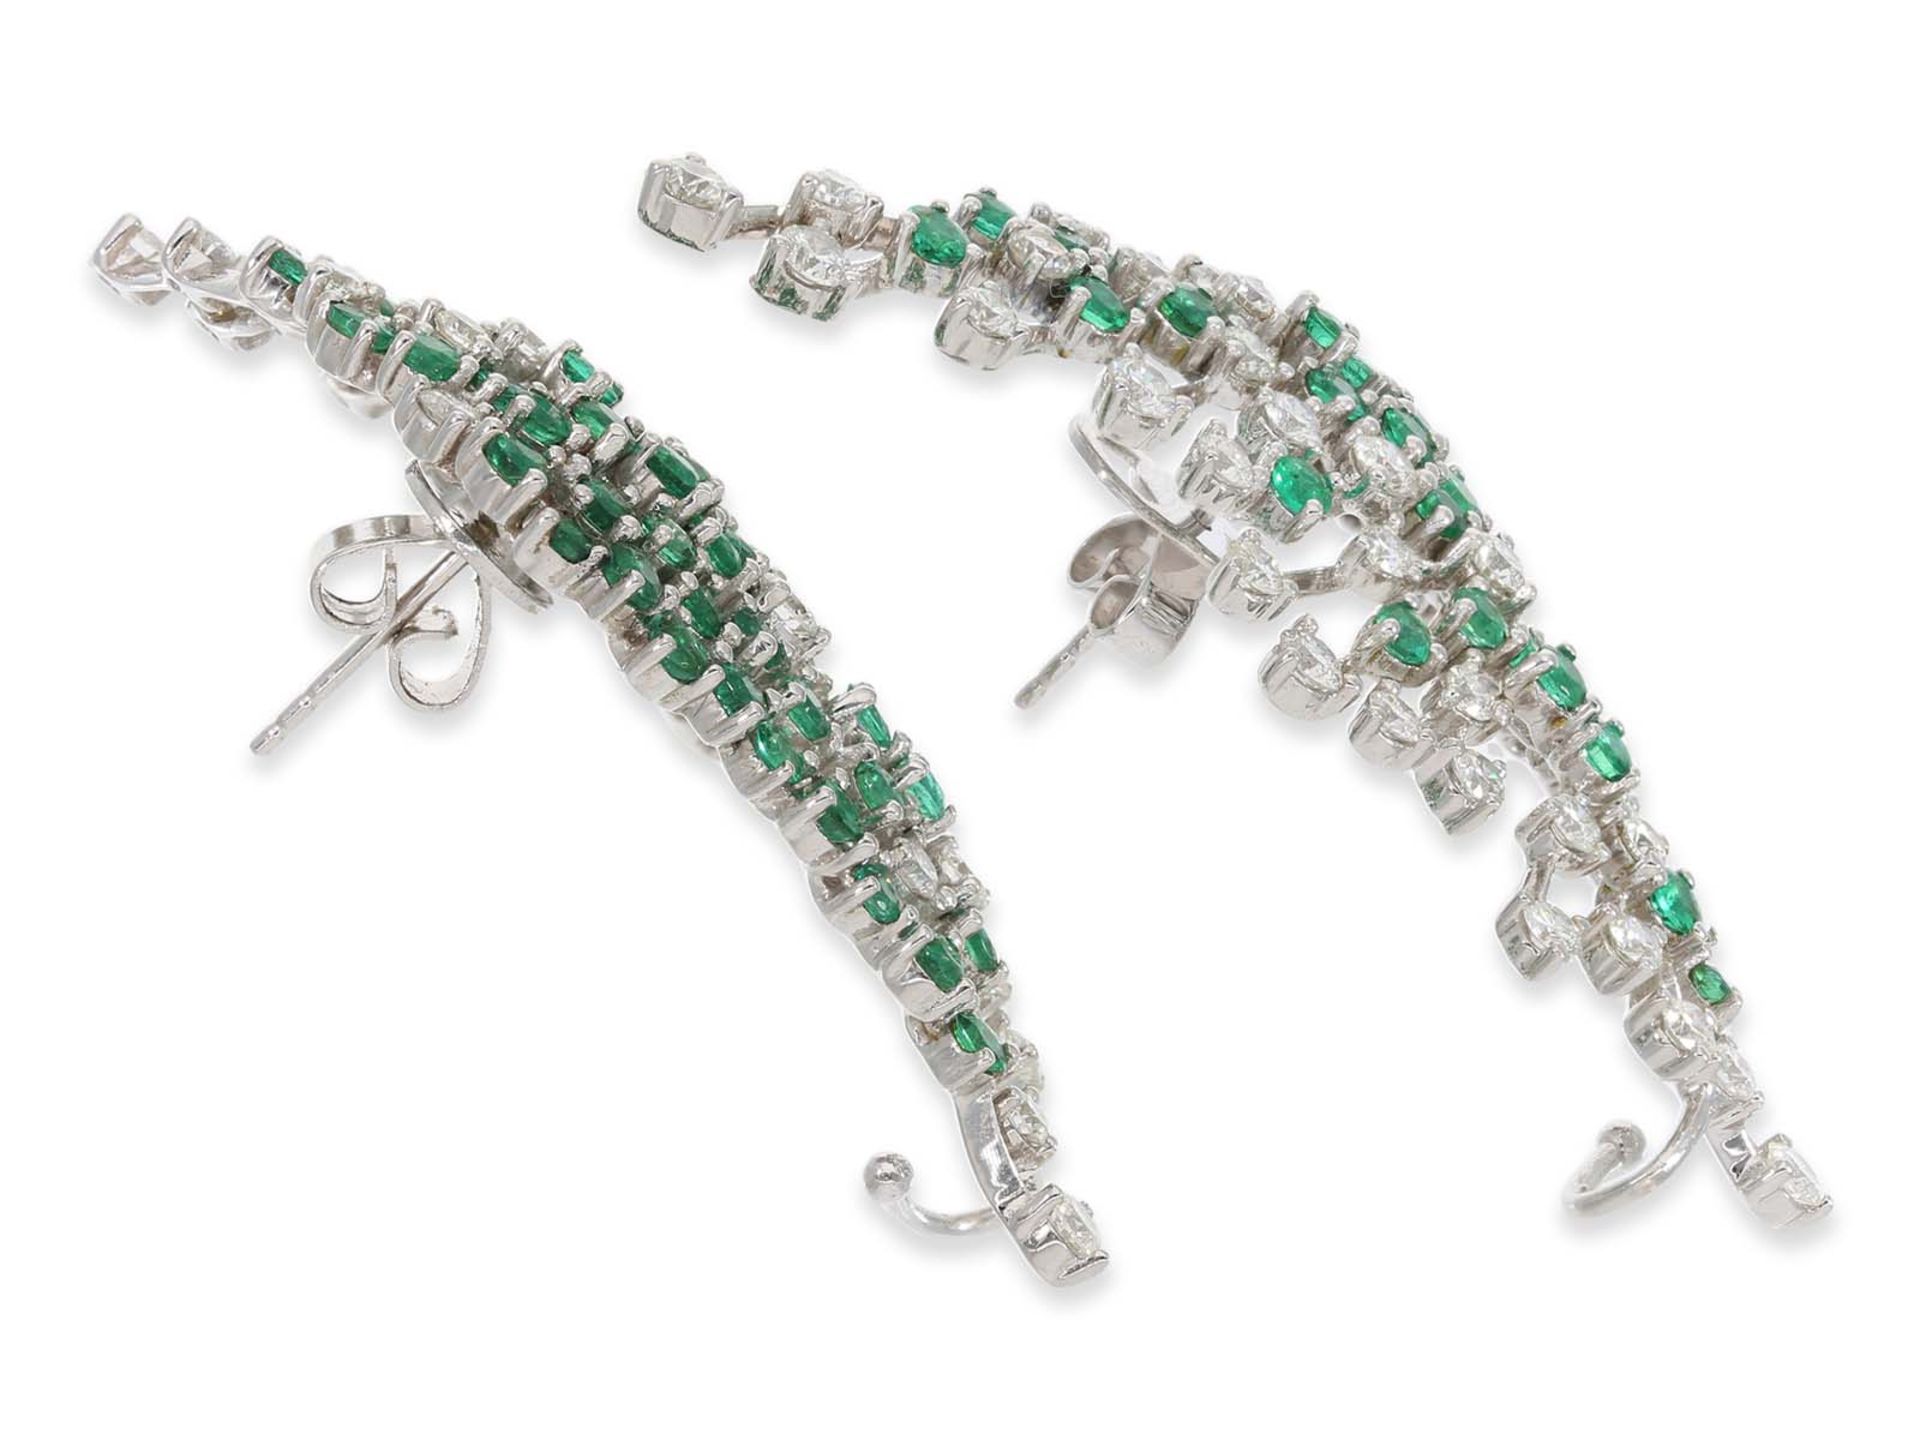 Ear jewelry: modern, unworn and fancy designer ear jewelry "wings" with diamonds and emeralds, 18K w - Image 2 of 3